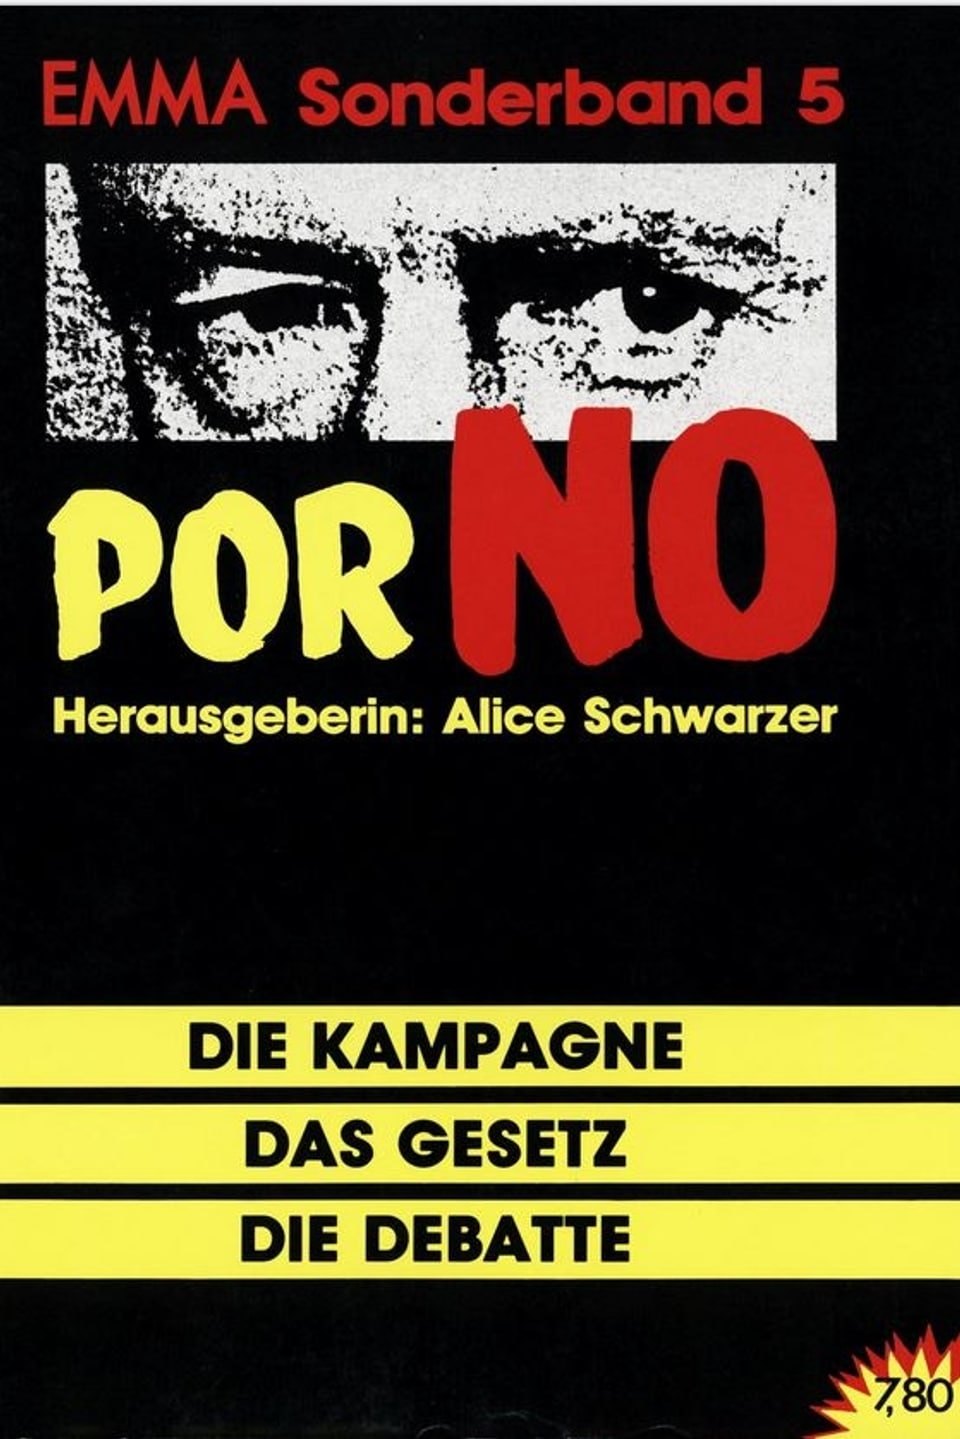 Por NO - Kampagne auf dem Cover der Emma-Sonderausgabe. 